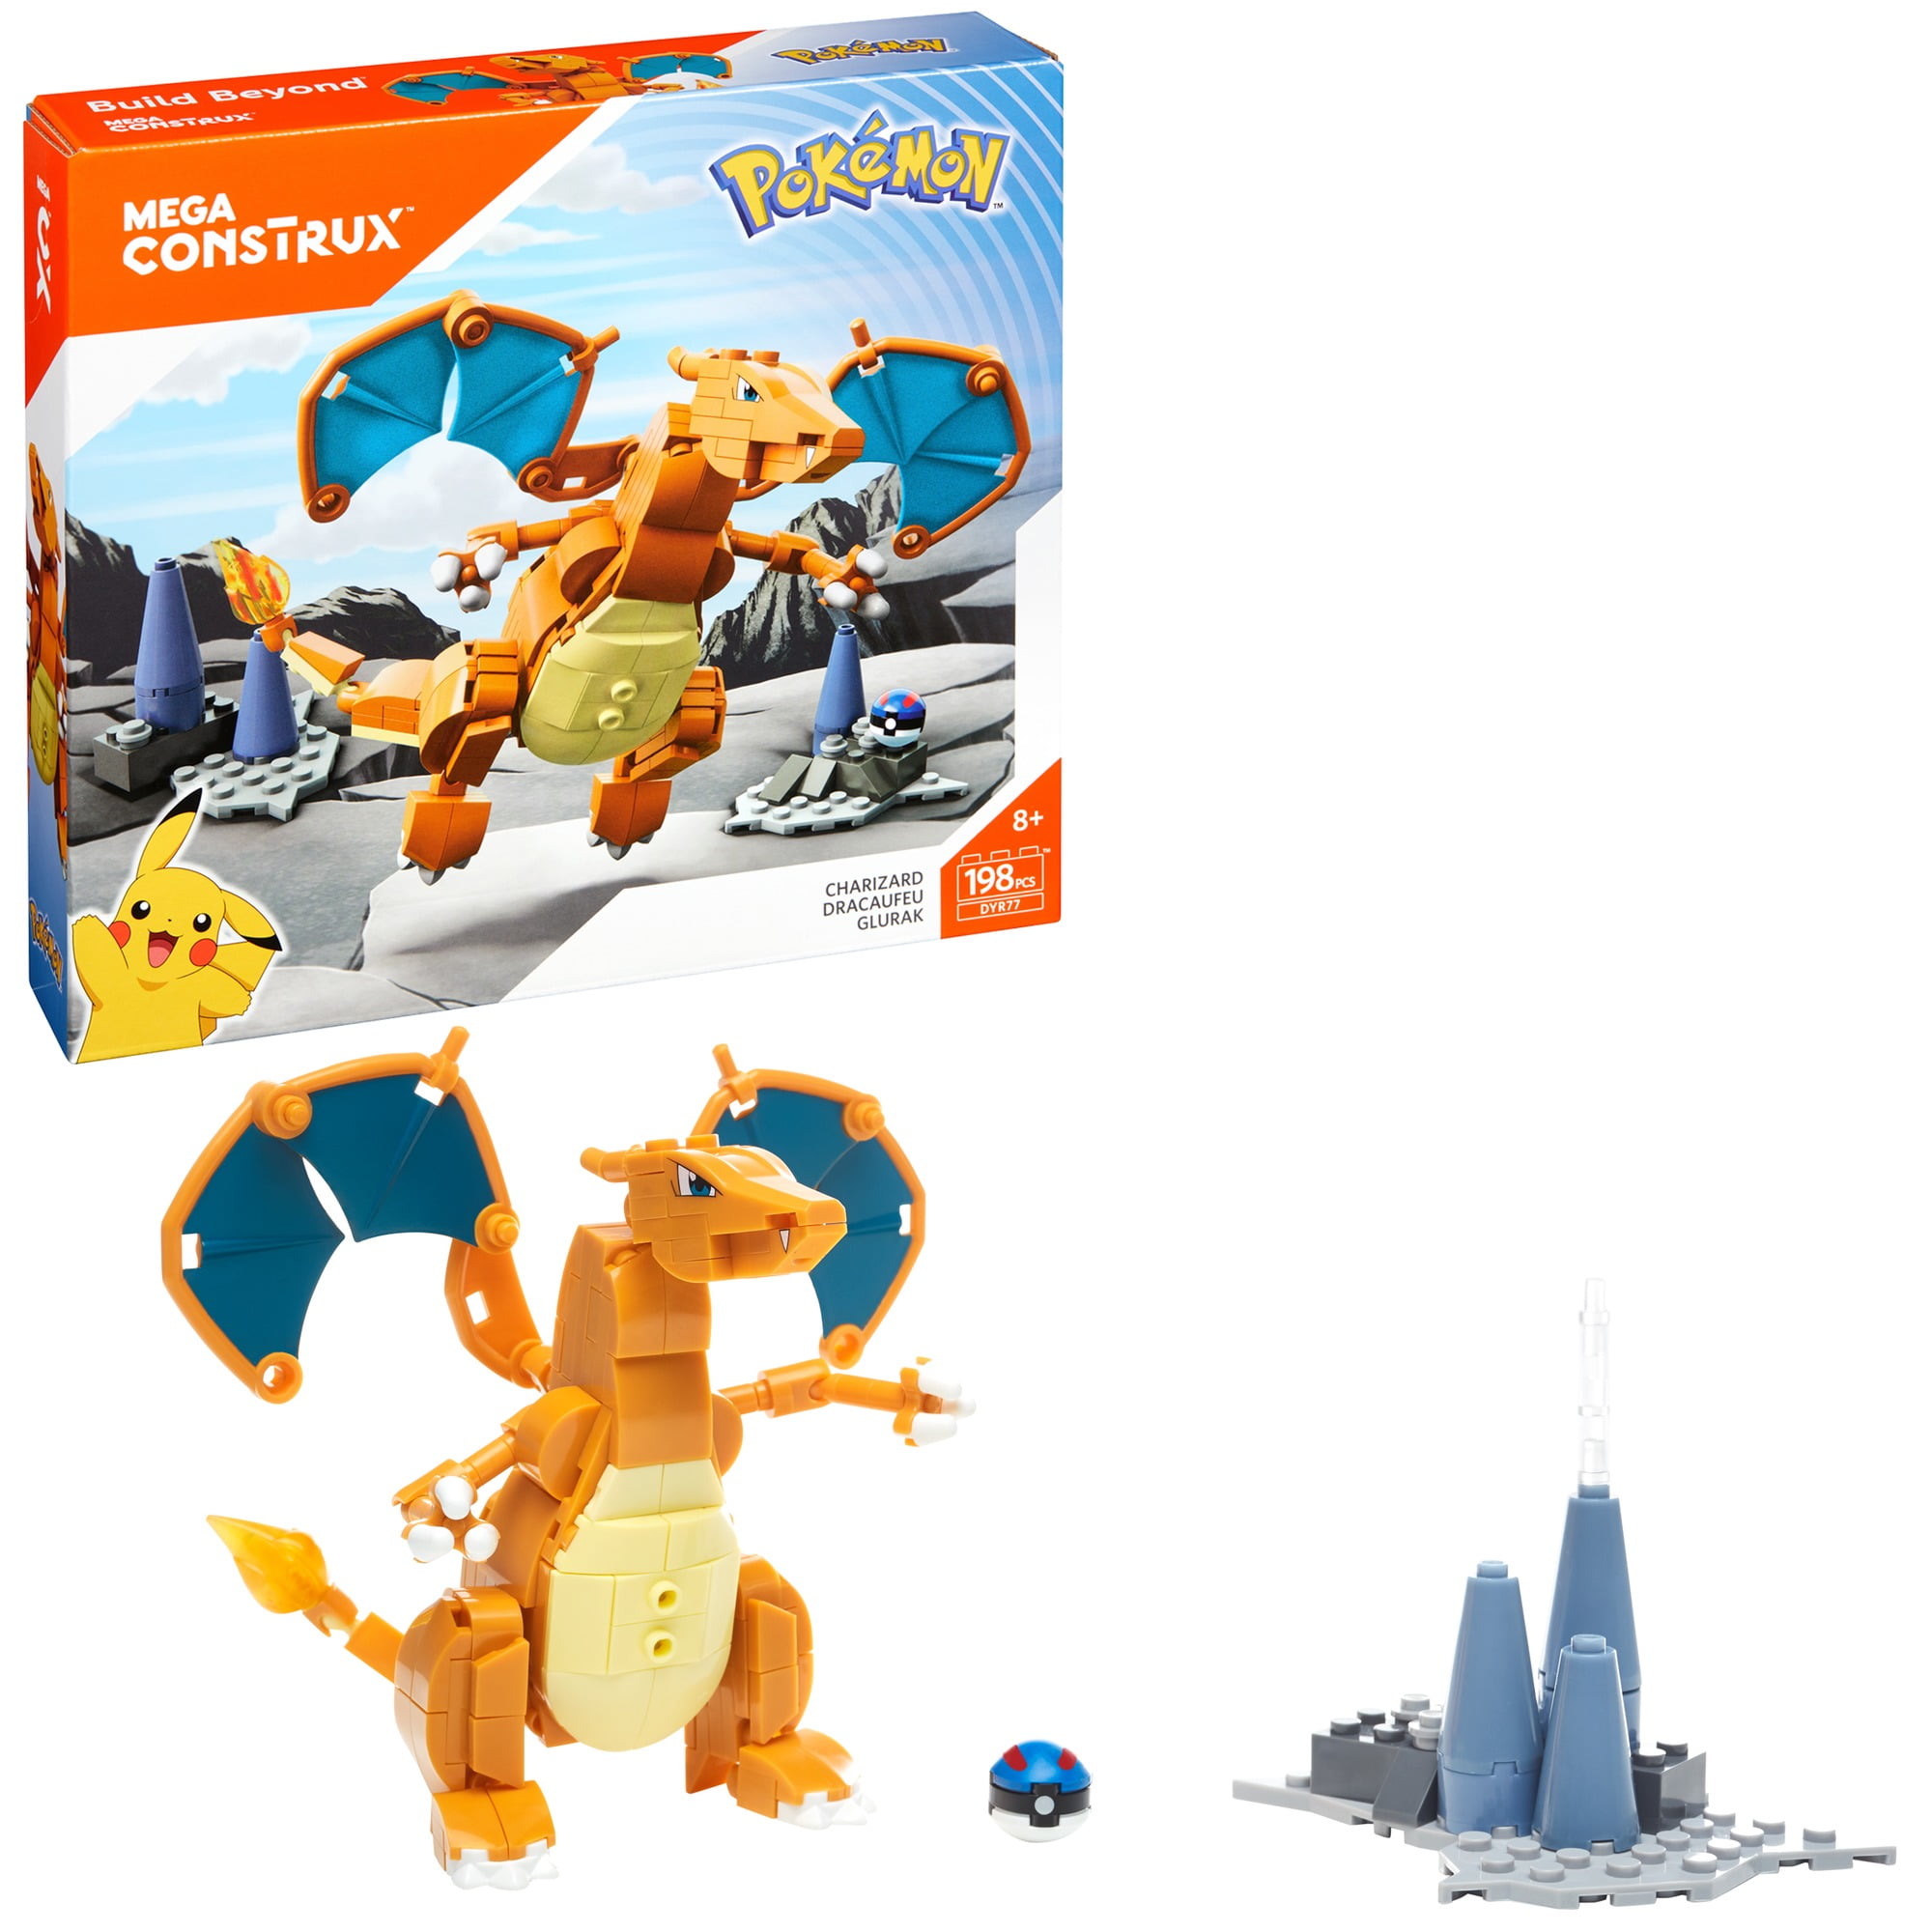  Mega Construx Pokemon Magikarp Construction Set, Building Toys  for Kids : Toys & Games